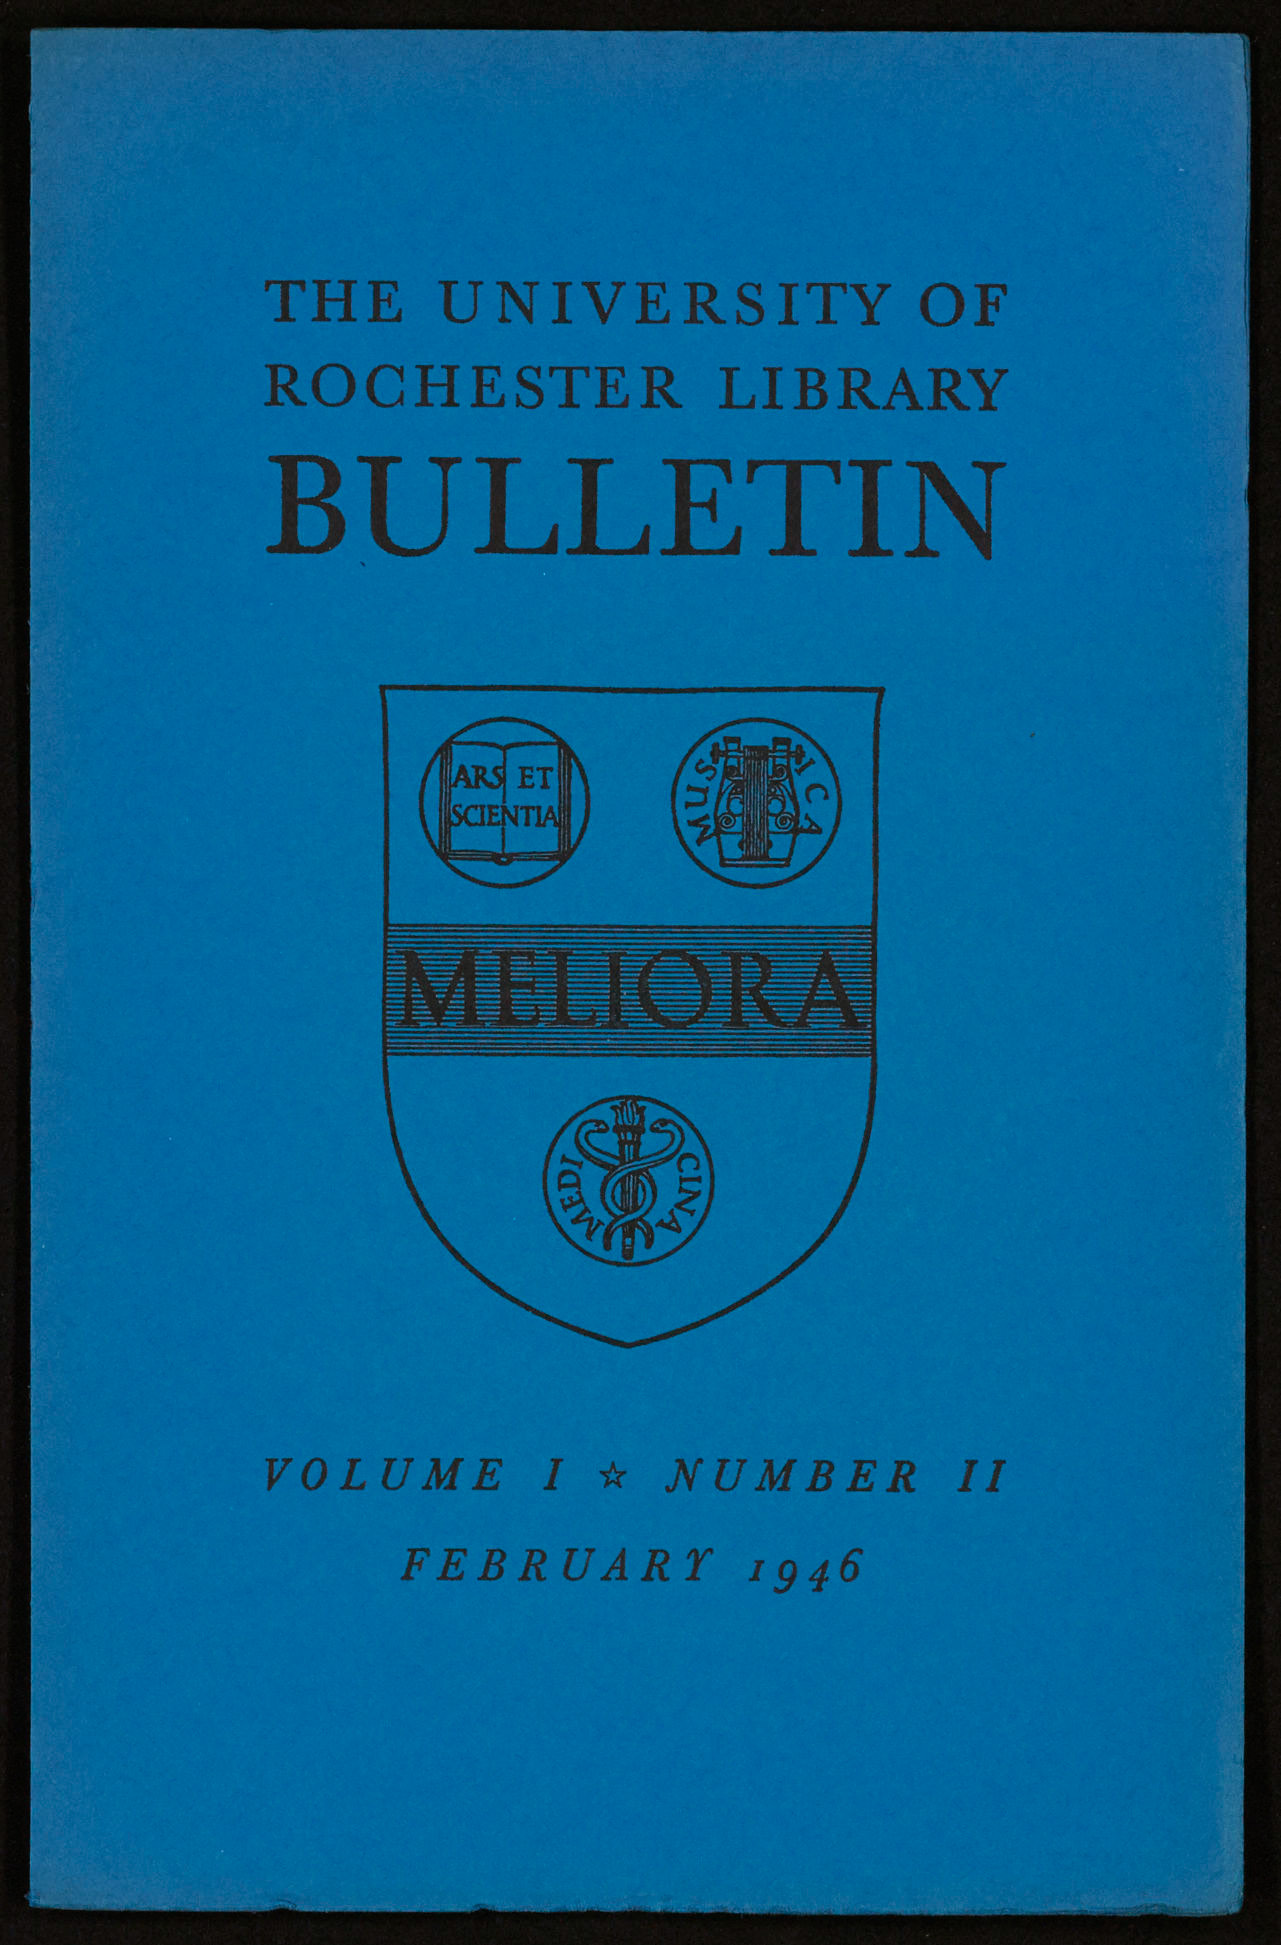 UR Library Bulletin, June 1946, cover